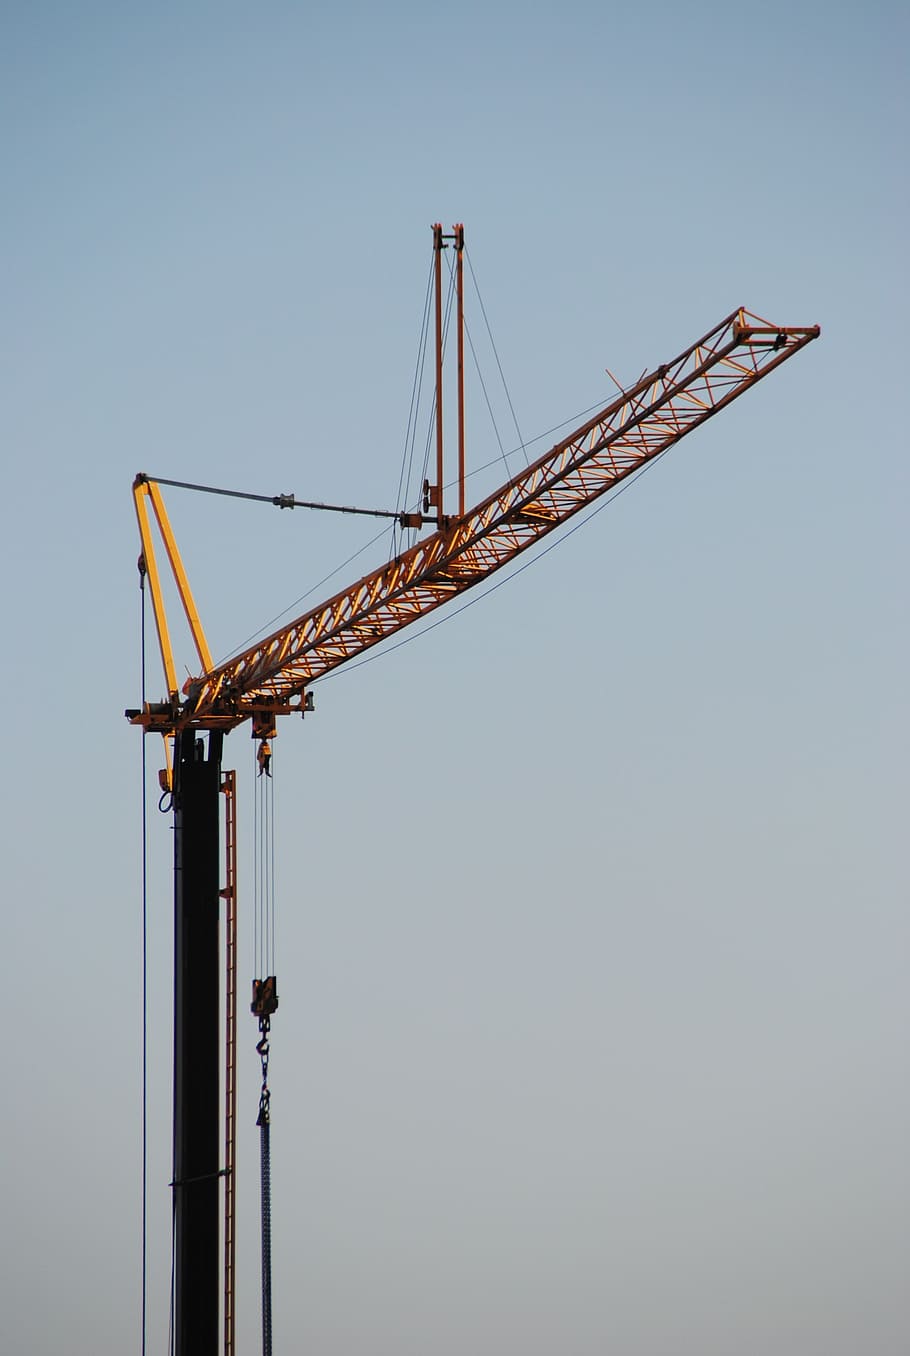 baukran, site, crane arm, build, crane, crane boom, boom, machinery, crane - construction machinery, construction site